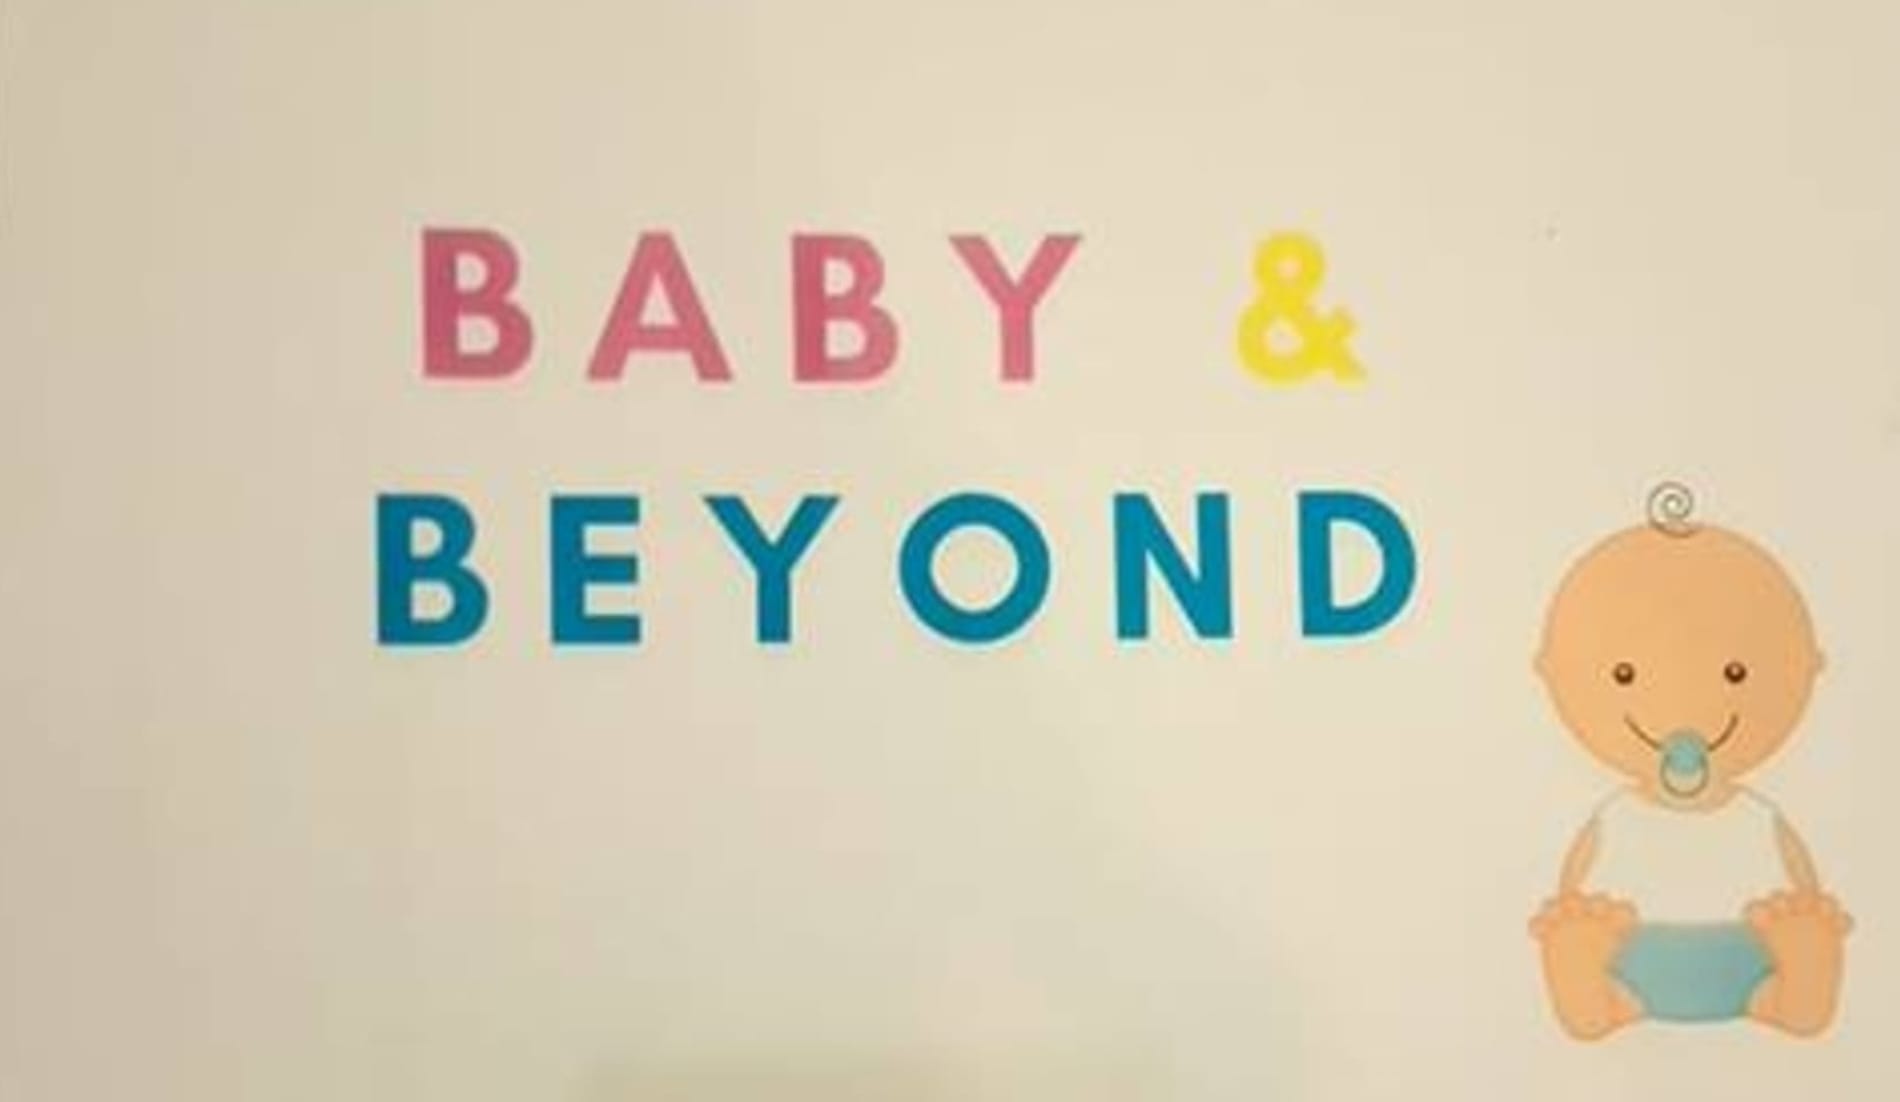 Baby & Beyond